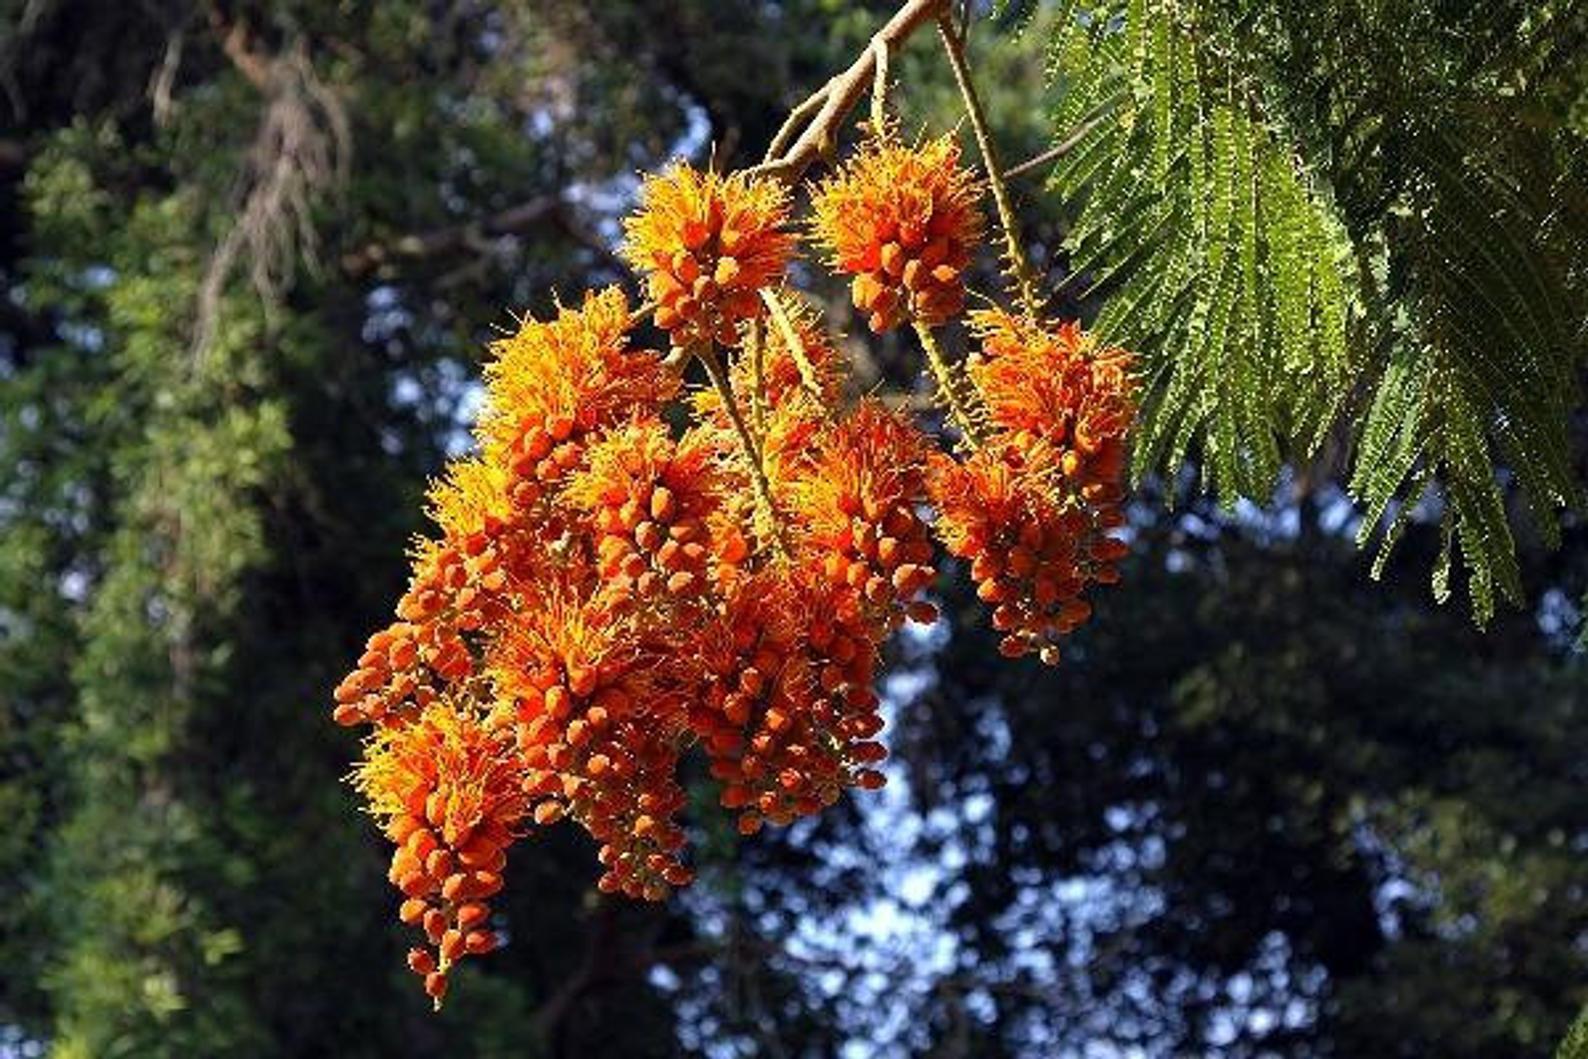 Colvillea racemosa - árbol glorioso, flor del paraíso - Quinta dos Ouriques